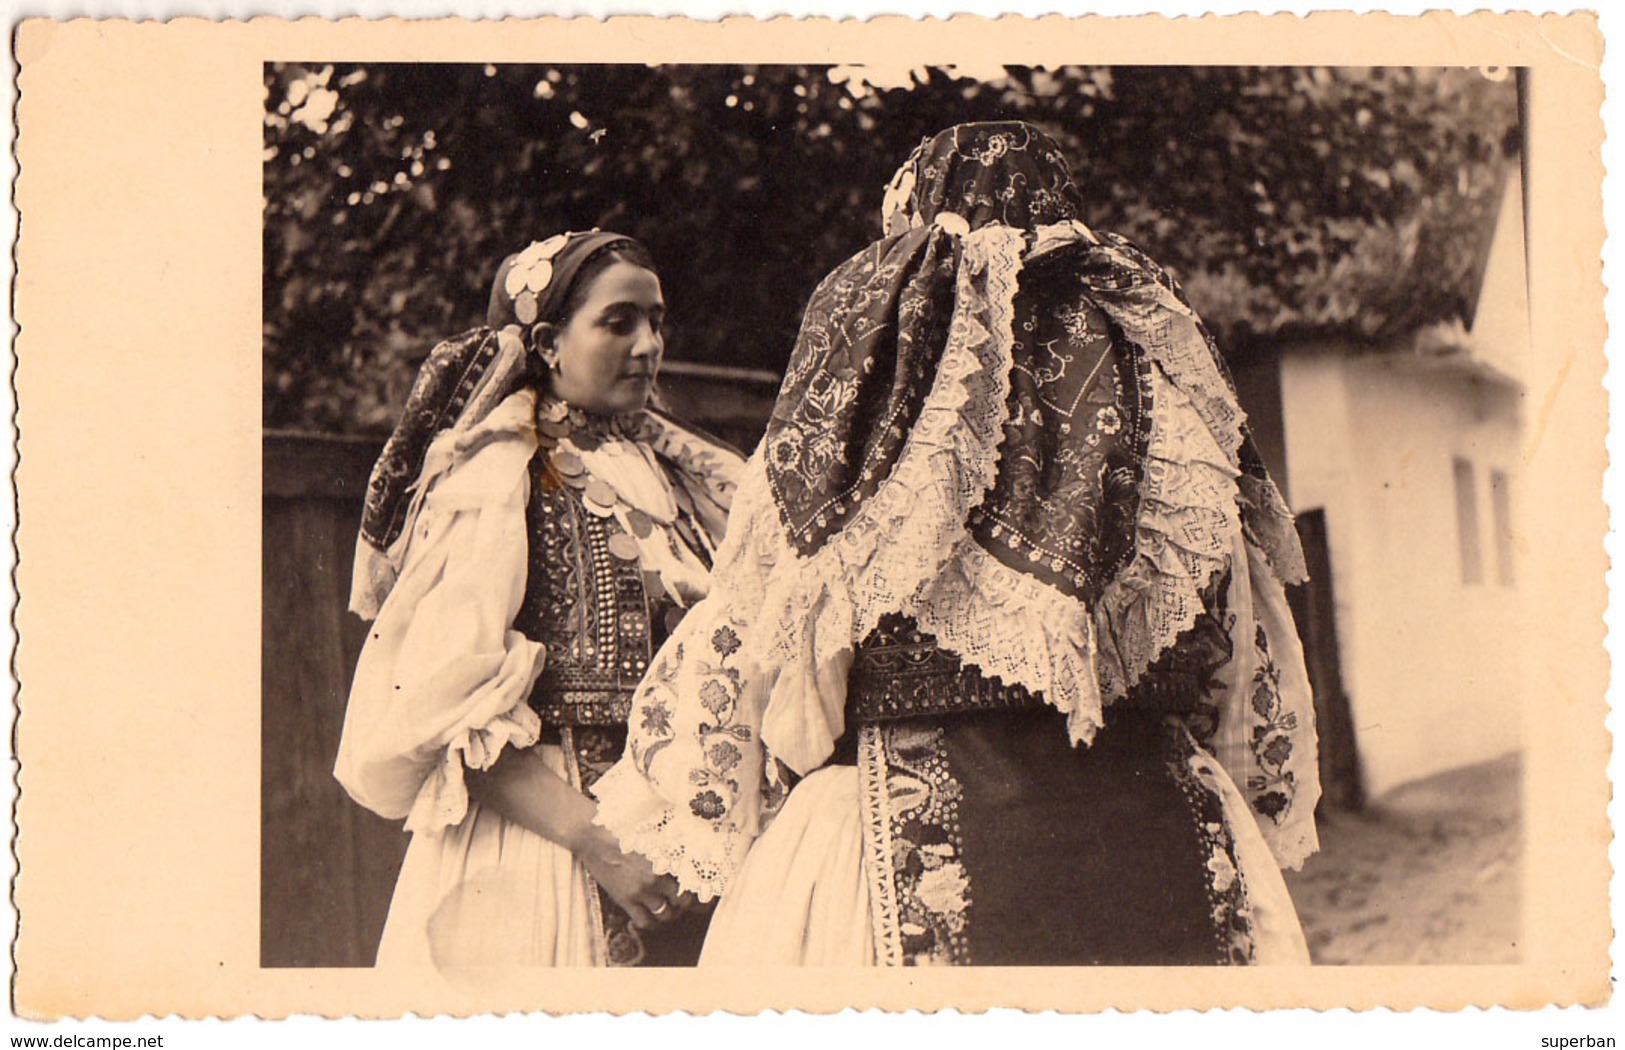 BANAT - COMUNA SECUSIGIU - ARAD : TYPES DU VILLAGE / COSTUMES - CARTE VRAIE PHOTO / REAL PHOTO POSTCARD ~ 1930 (ad419) - Rumänien